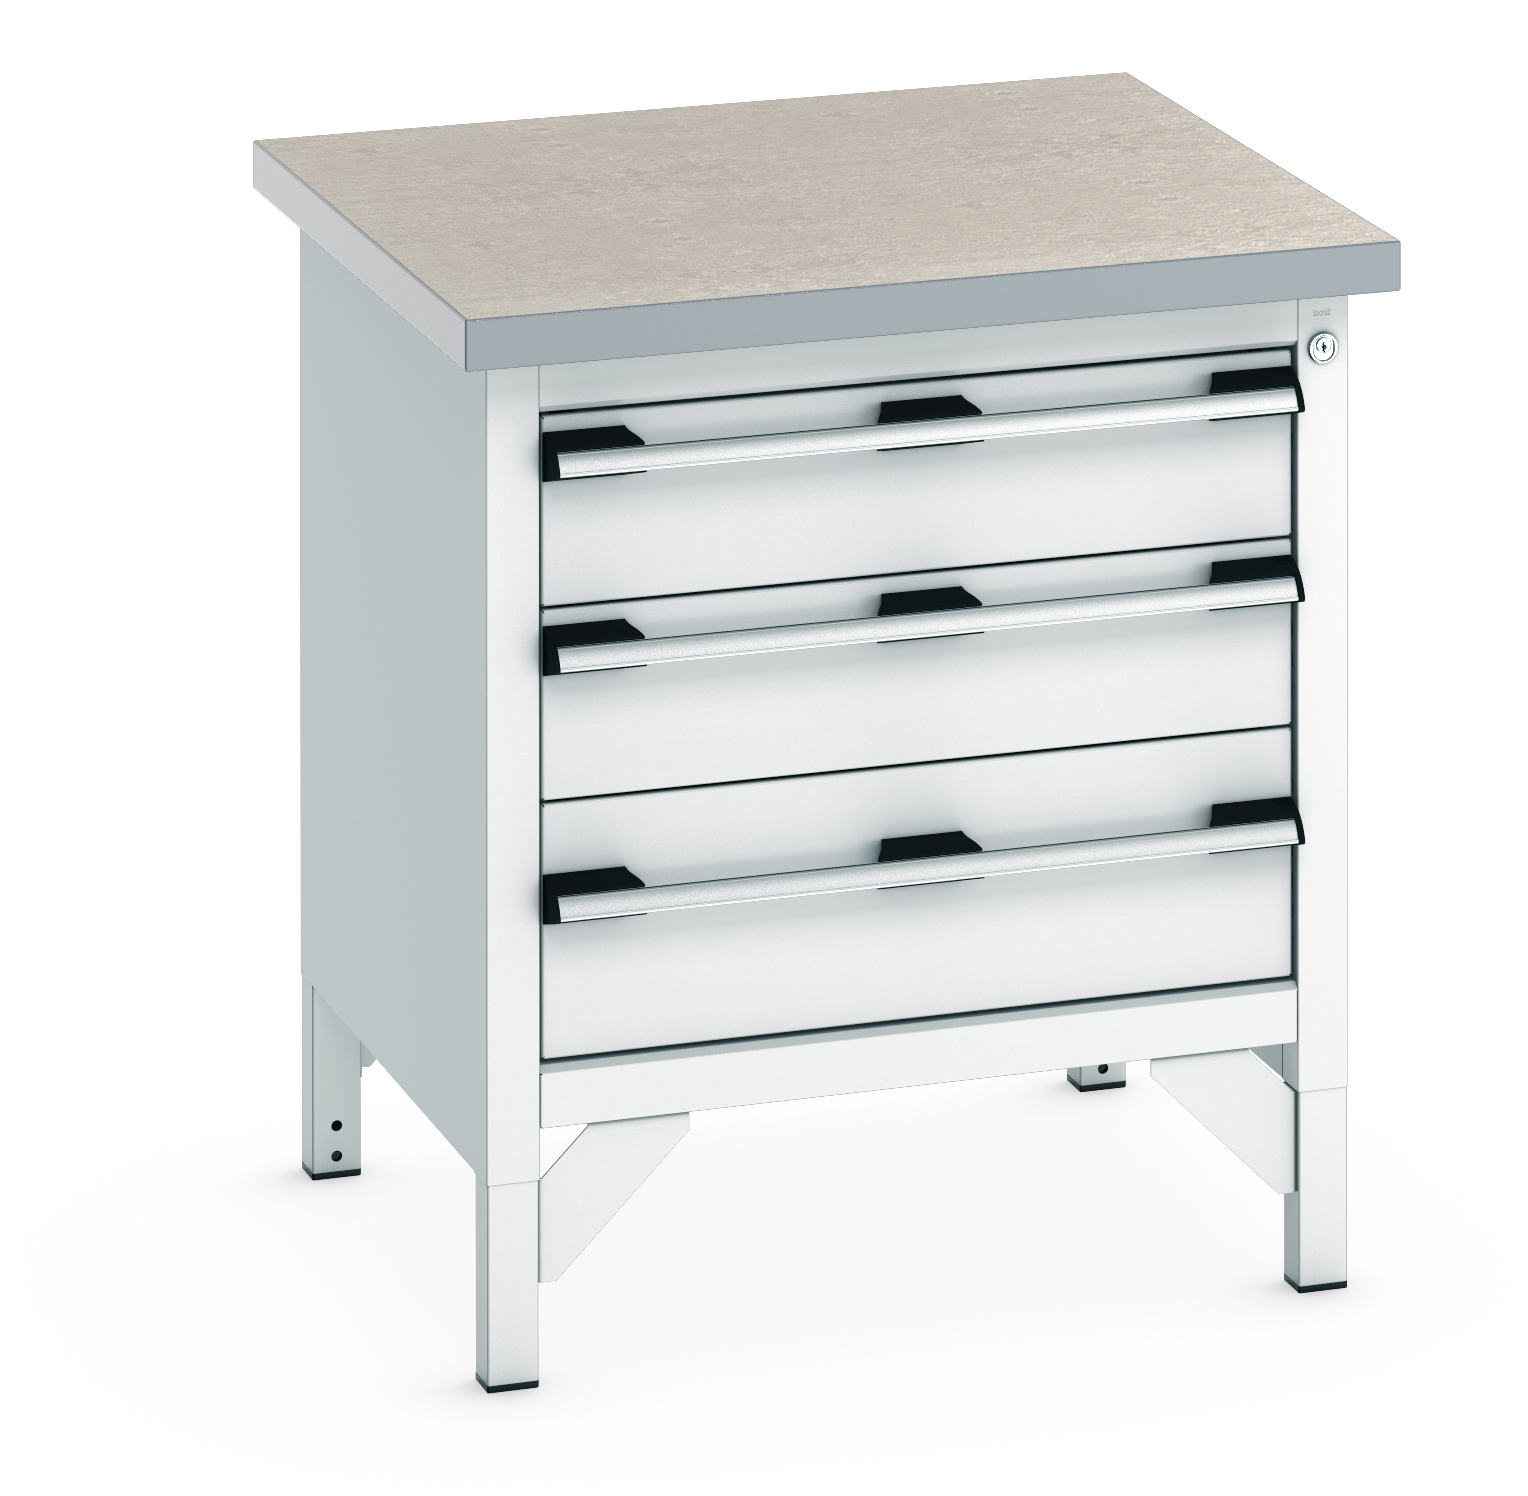 Bott Cubio Storage Bench With 3 Drawer Cabinet - 41002012.16V